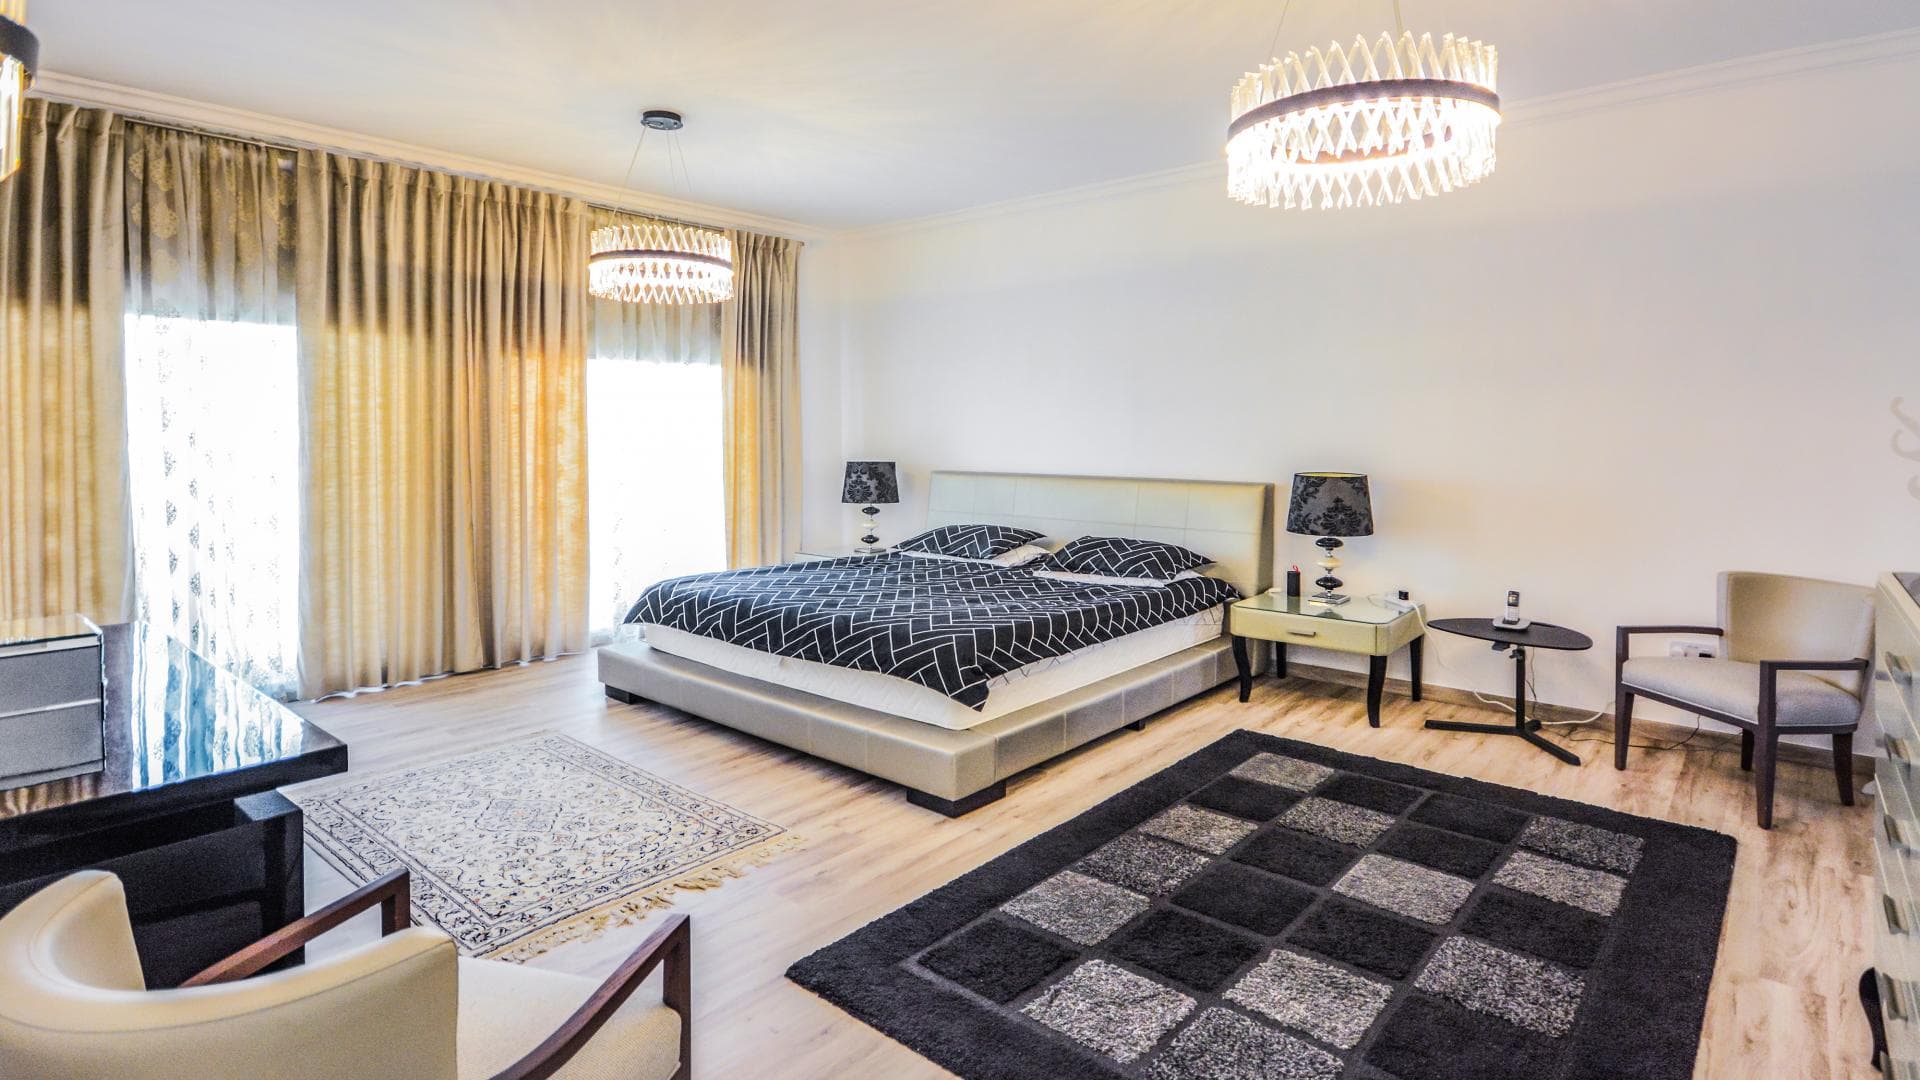 4 Bedroom Villa For Sale European Clusters Lp15587 2731ce3f9a317a00.jpg